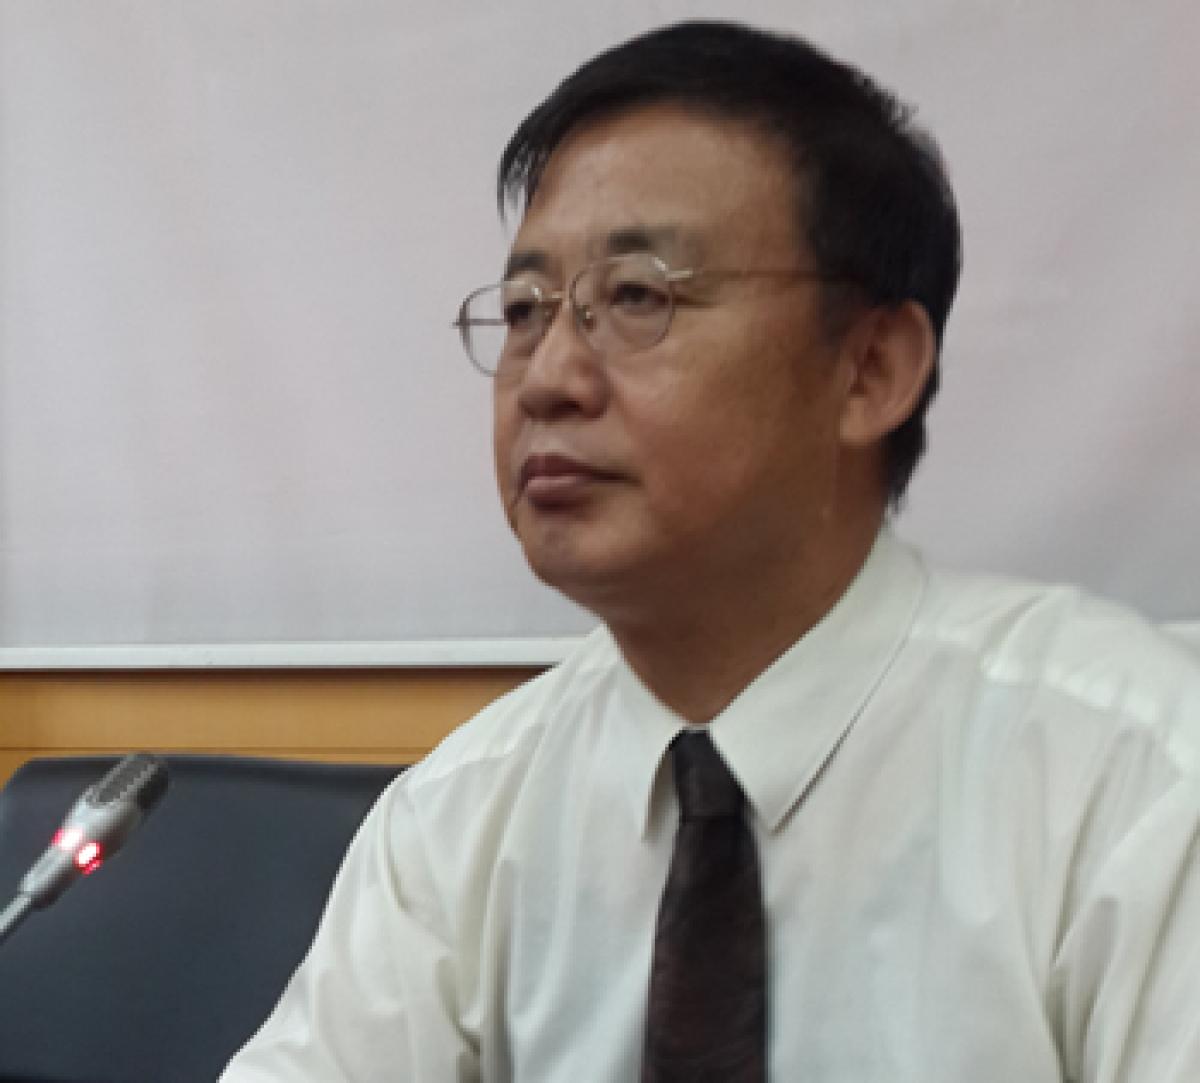 Wang Hao, Deputy Editor-in-Chief of China Daily, Beijing